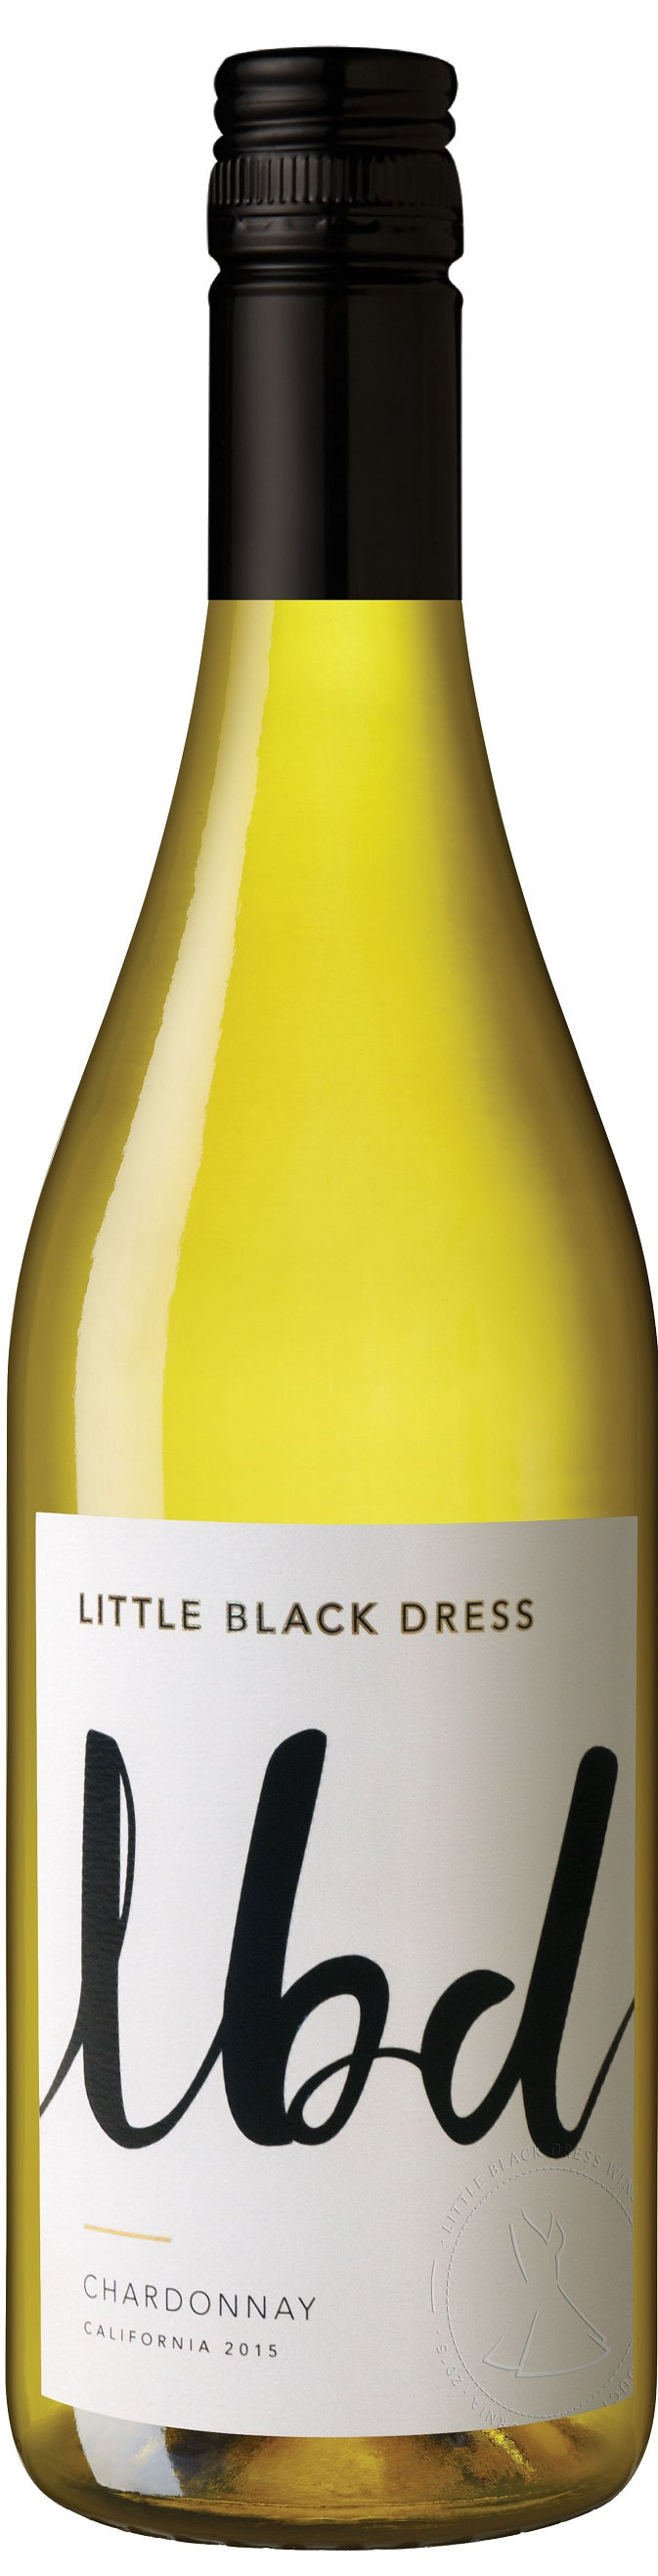 Little Black Dress Chardonnay 2017